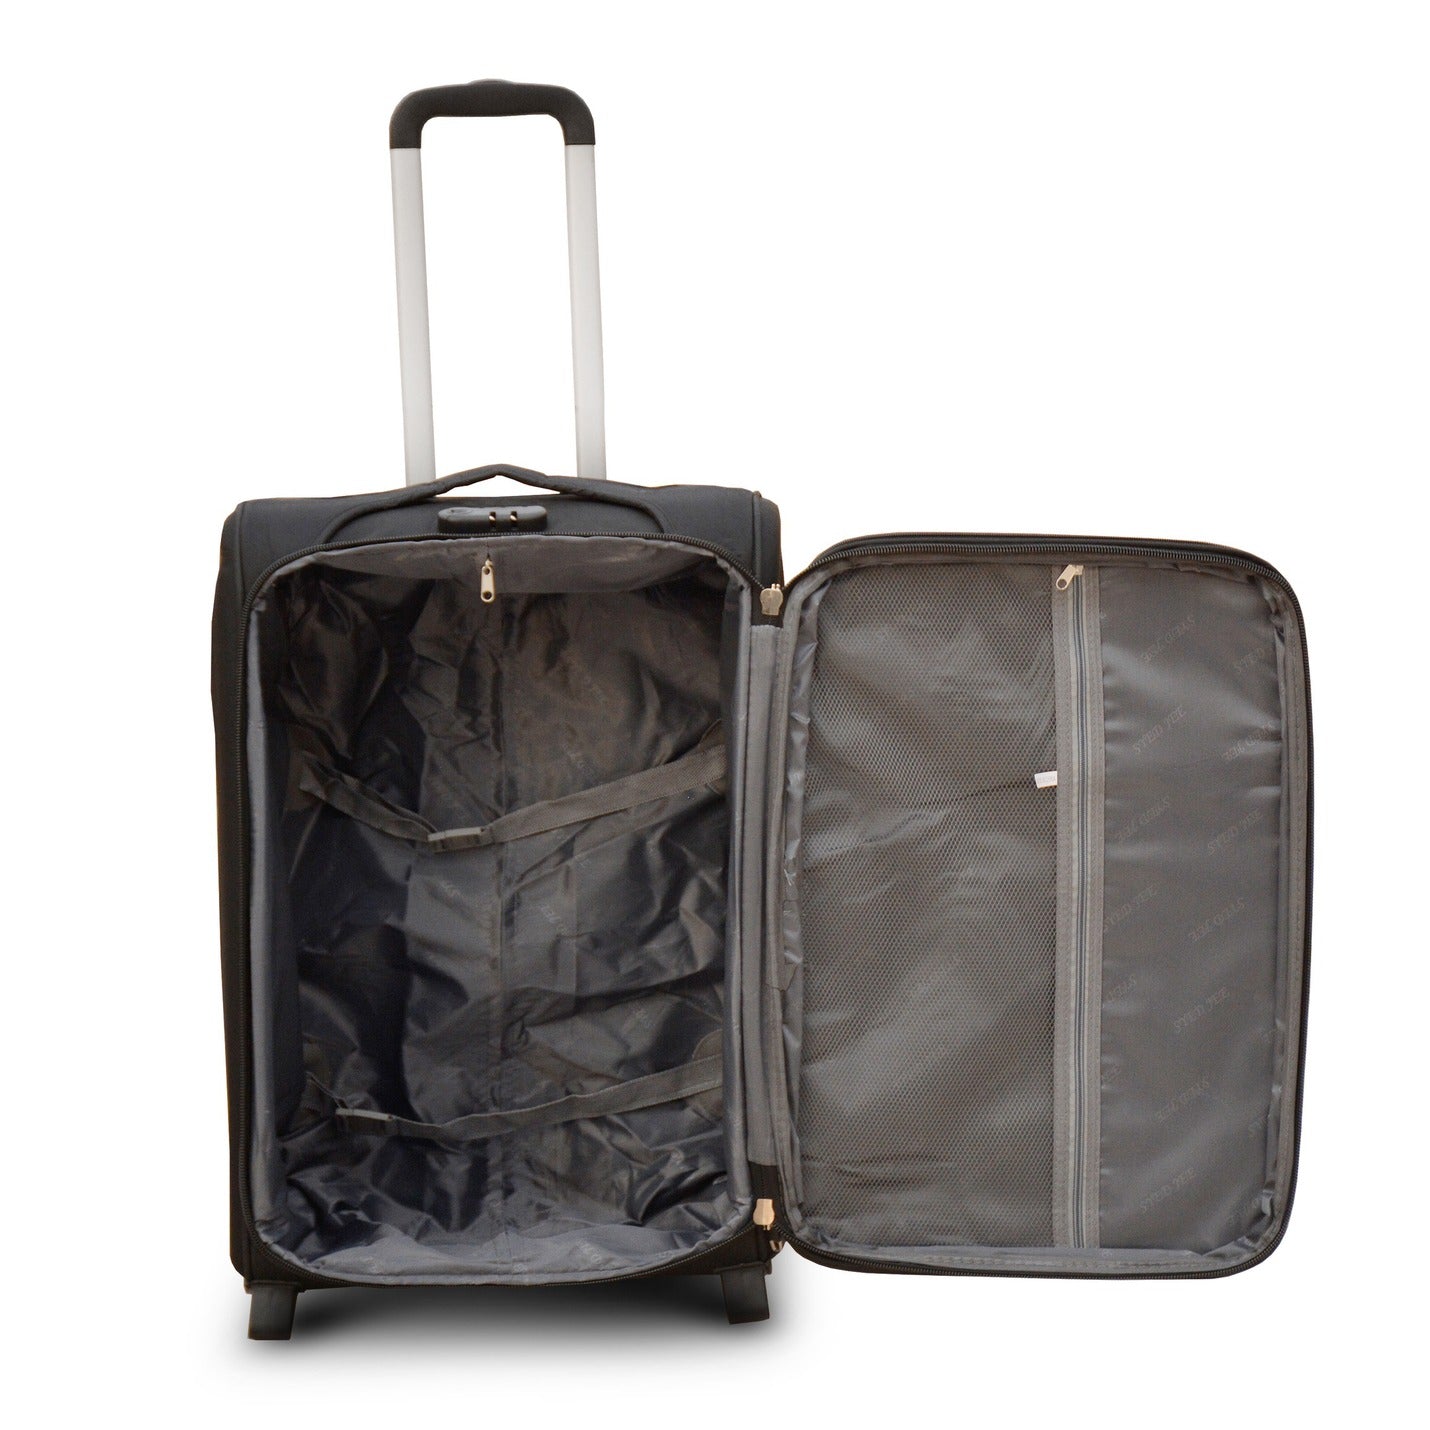 28" Black Colour SJ JIAN 2 Wheel Luggage Lightweight Soft Material Trolley Bag